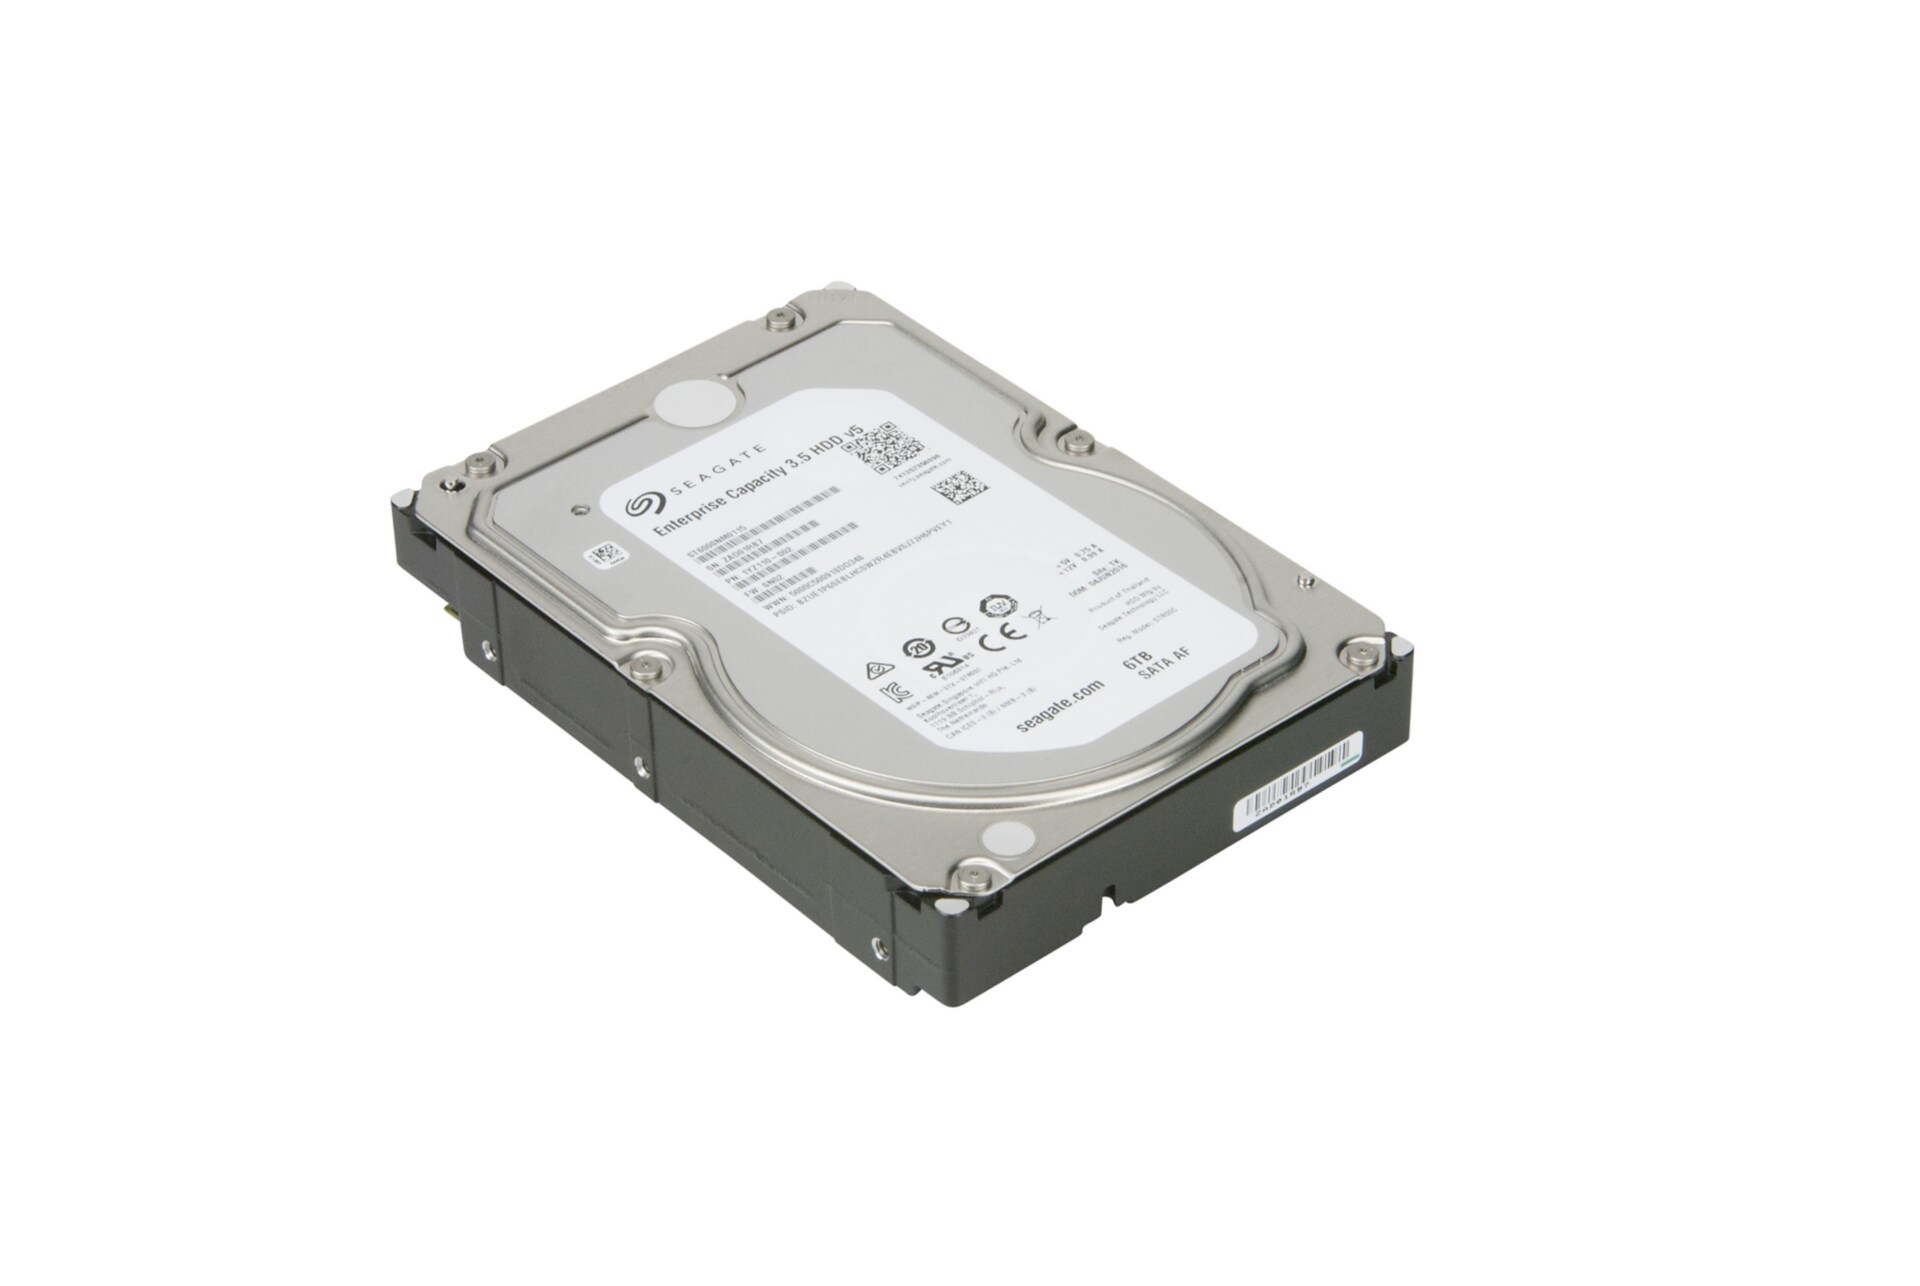 Seagate - hard drive - 6 TB - SATA 6Gb/s